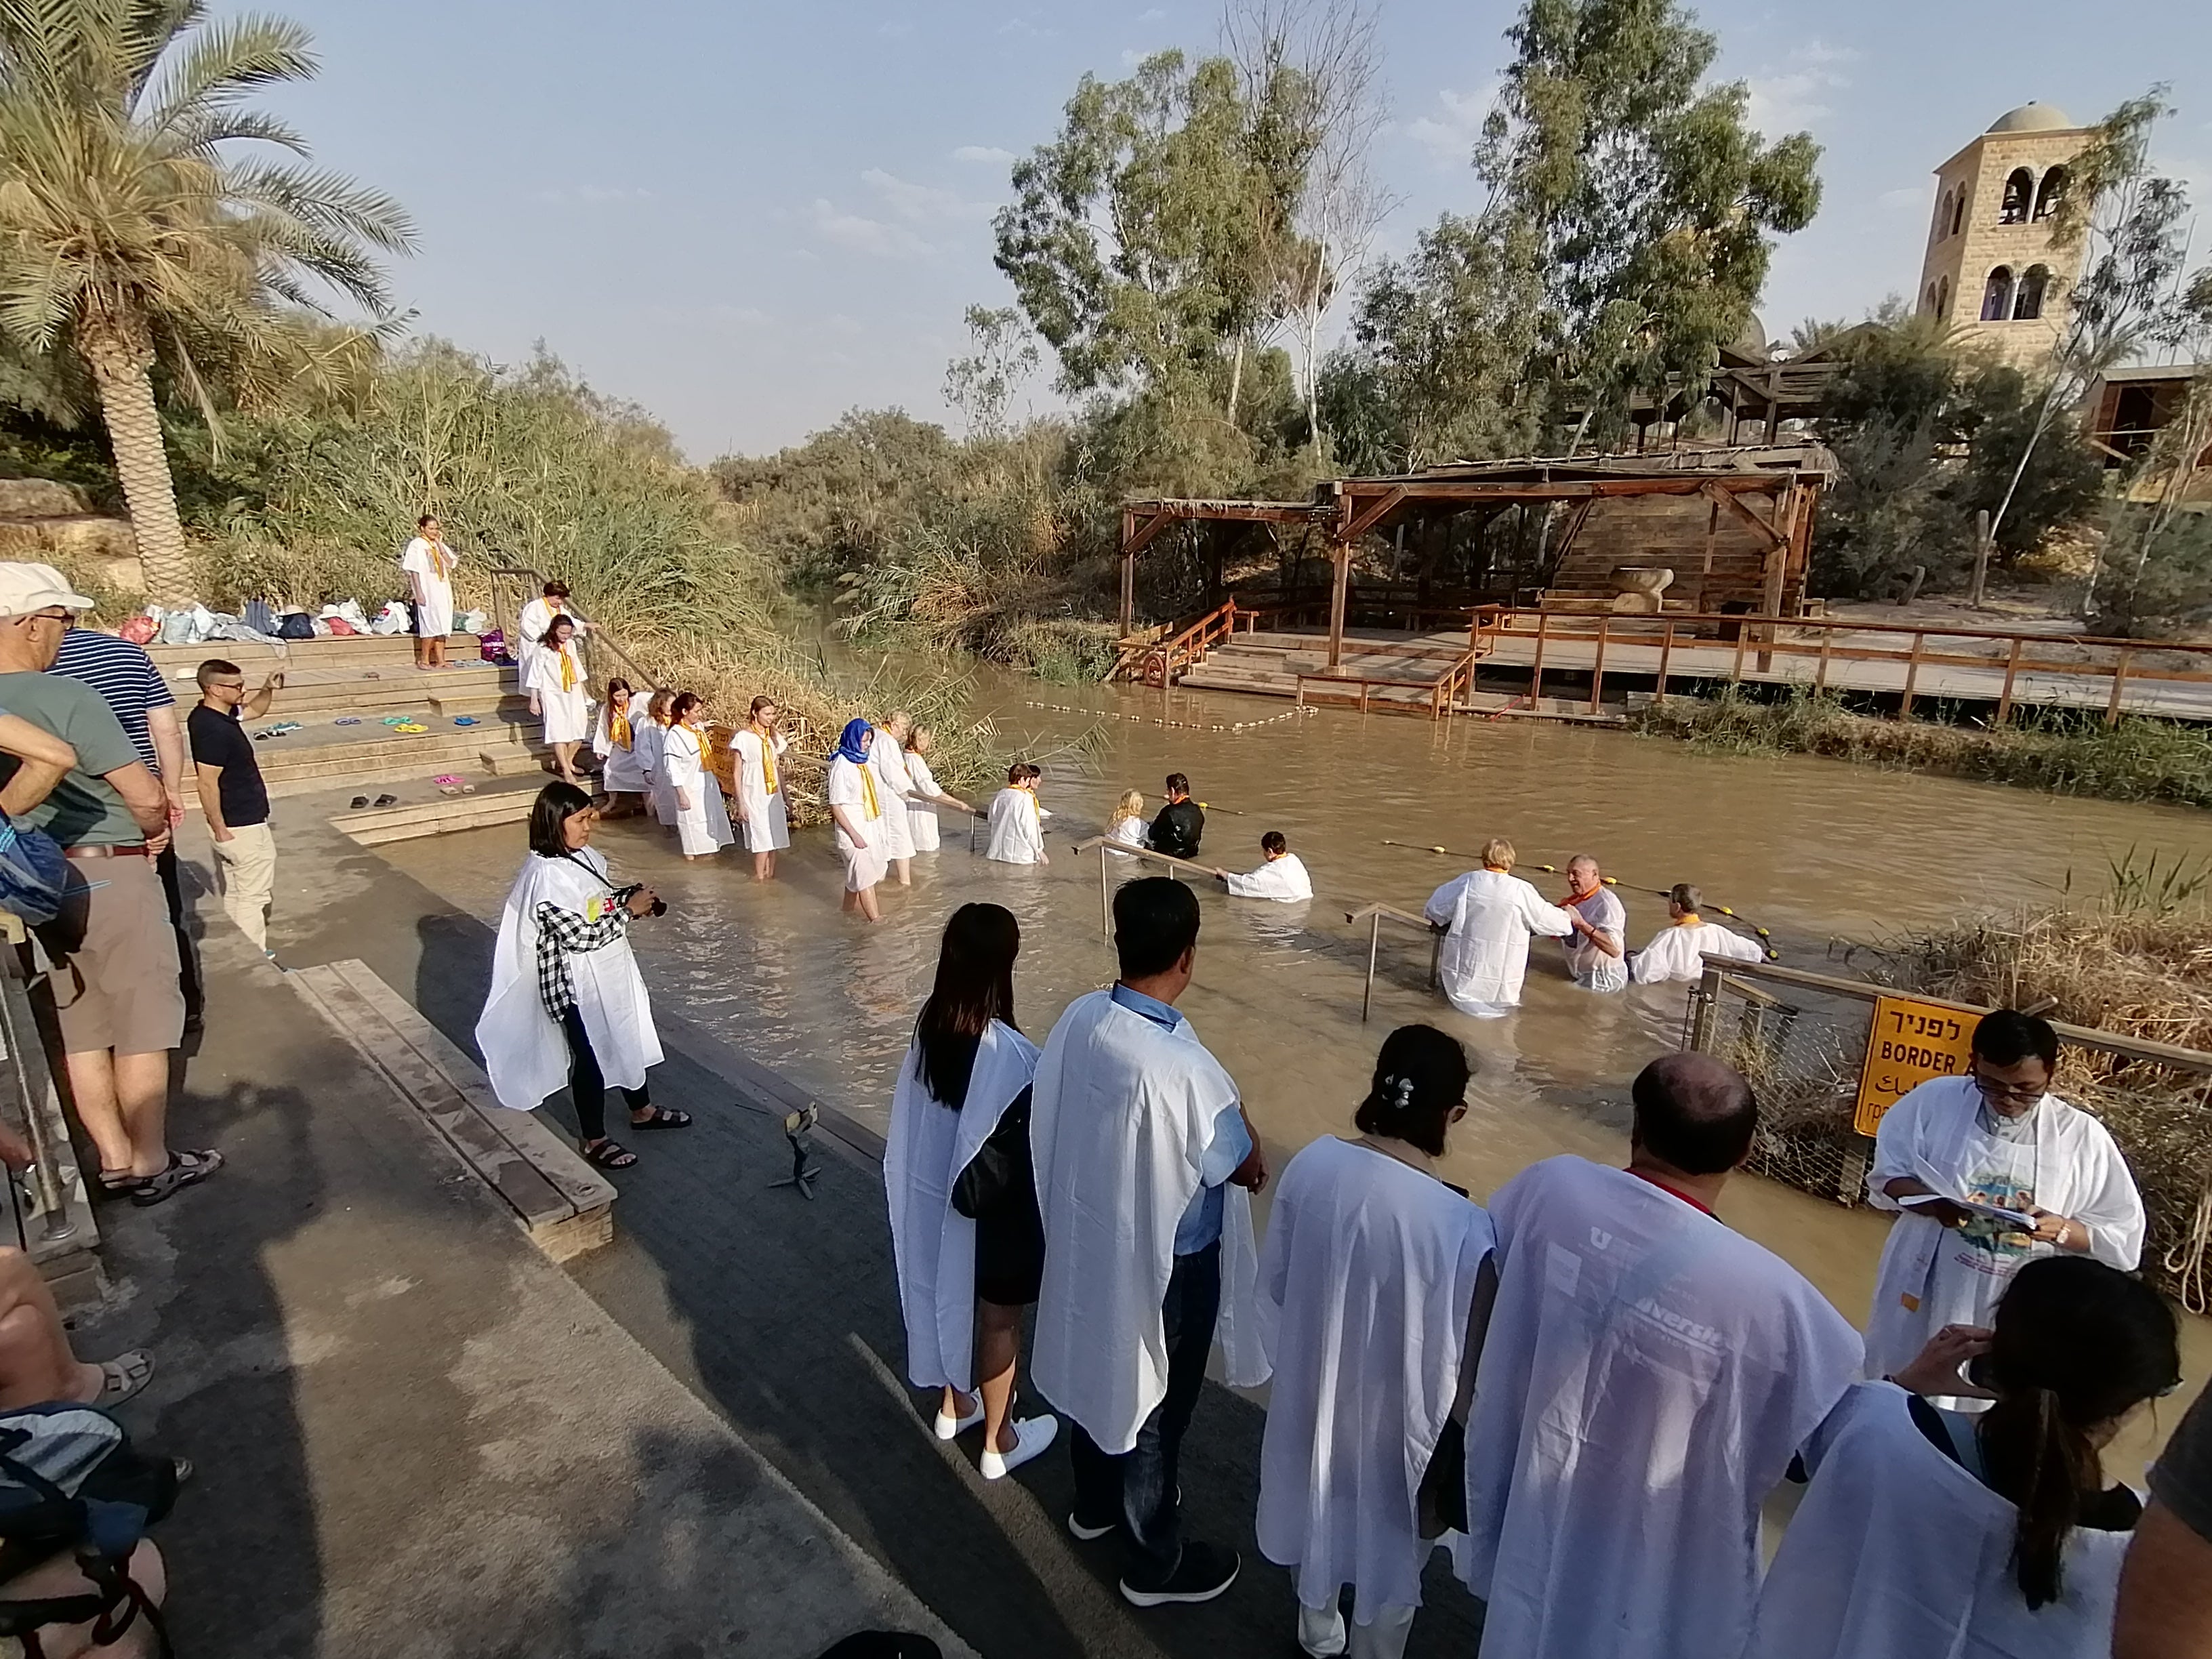 Jordan River Bible Tour to Jericho from Jerusalem and Tel Aviv